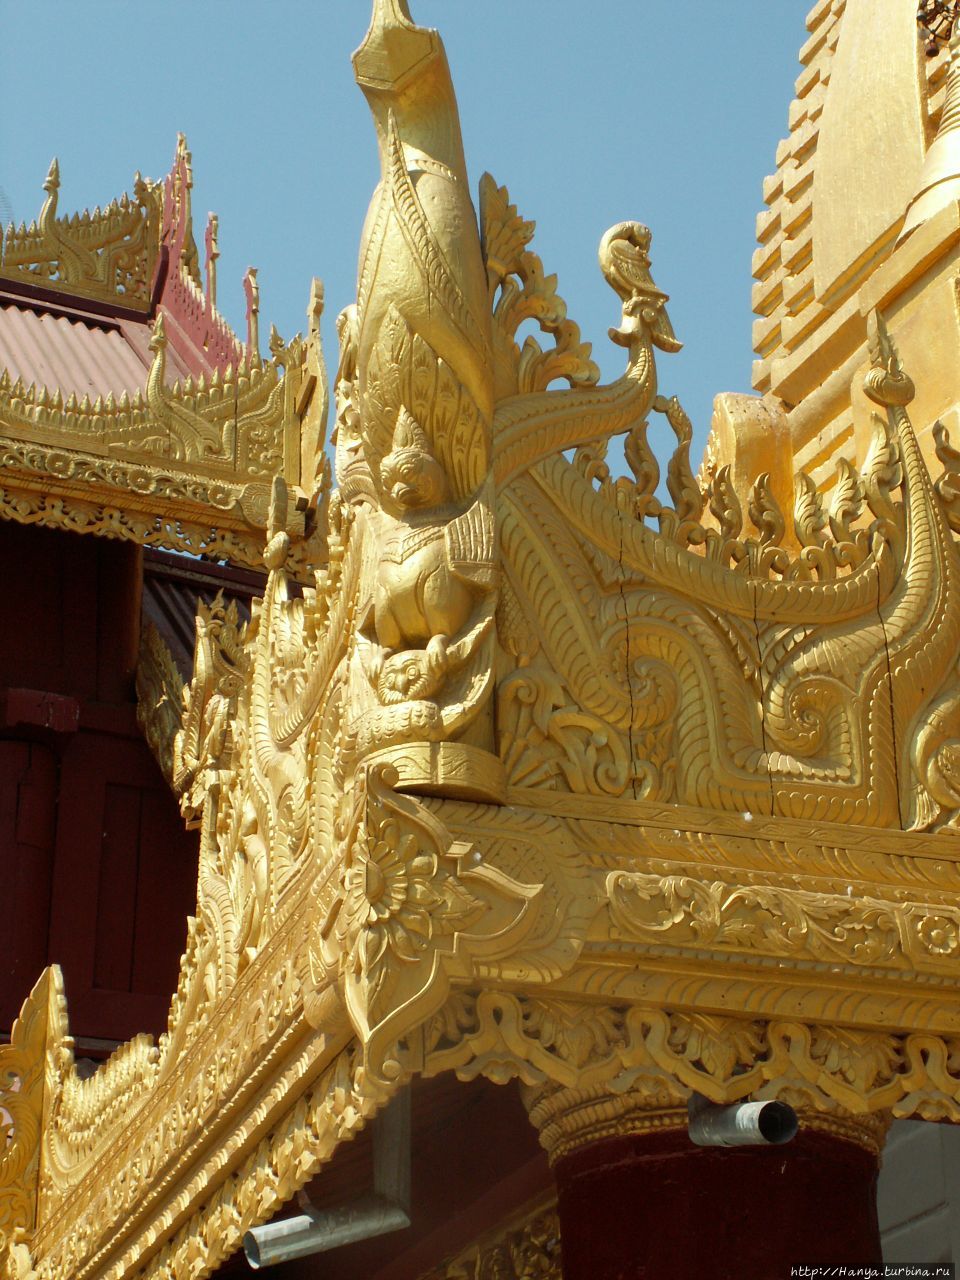 Пагода Швезигон Баган, Мьянма